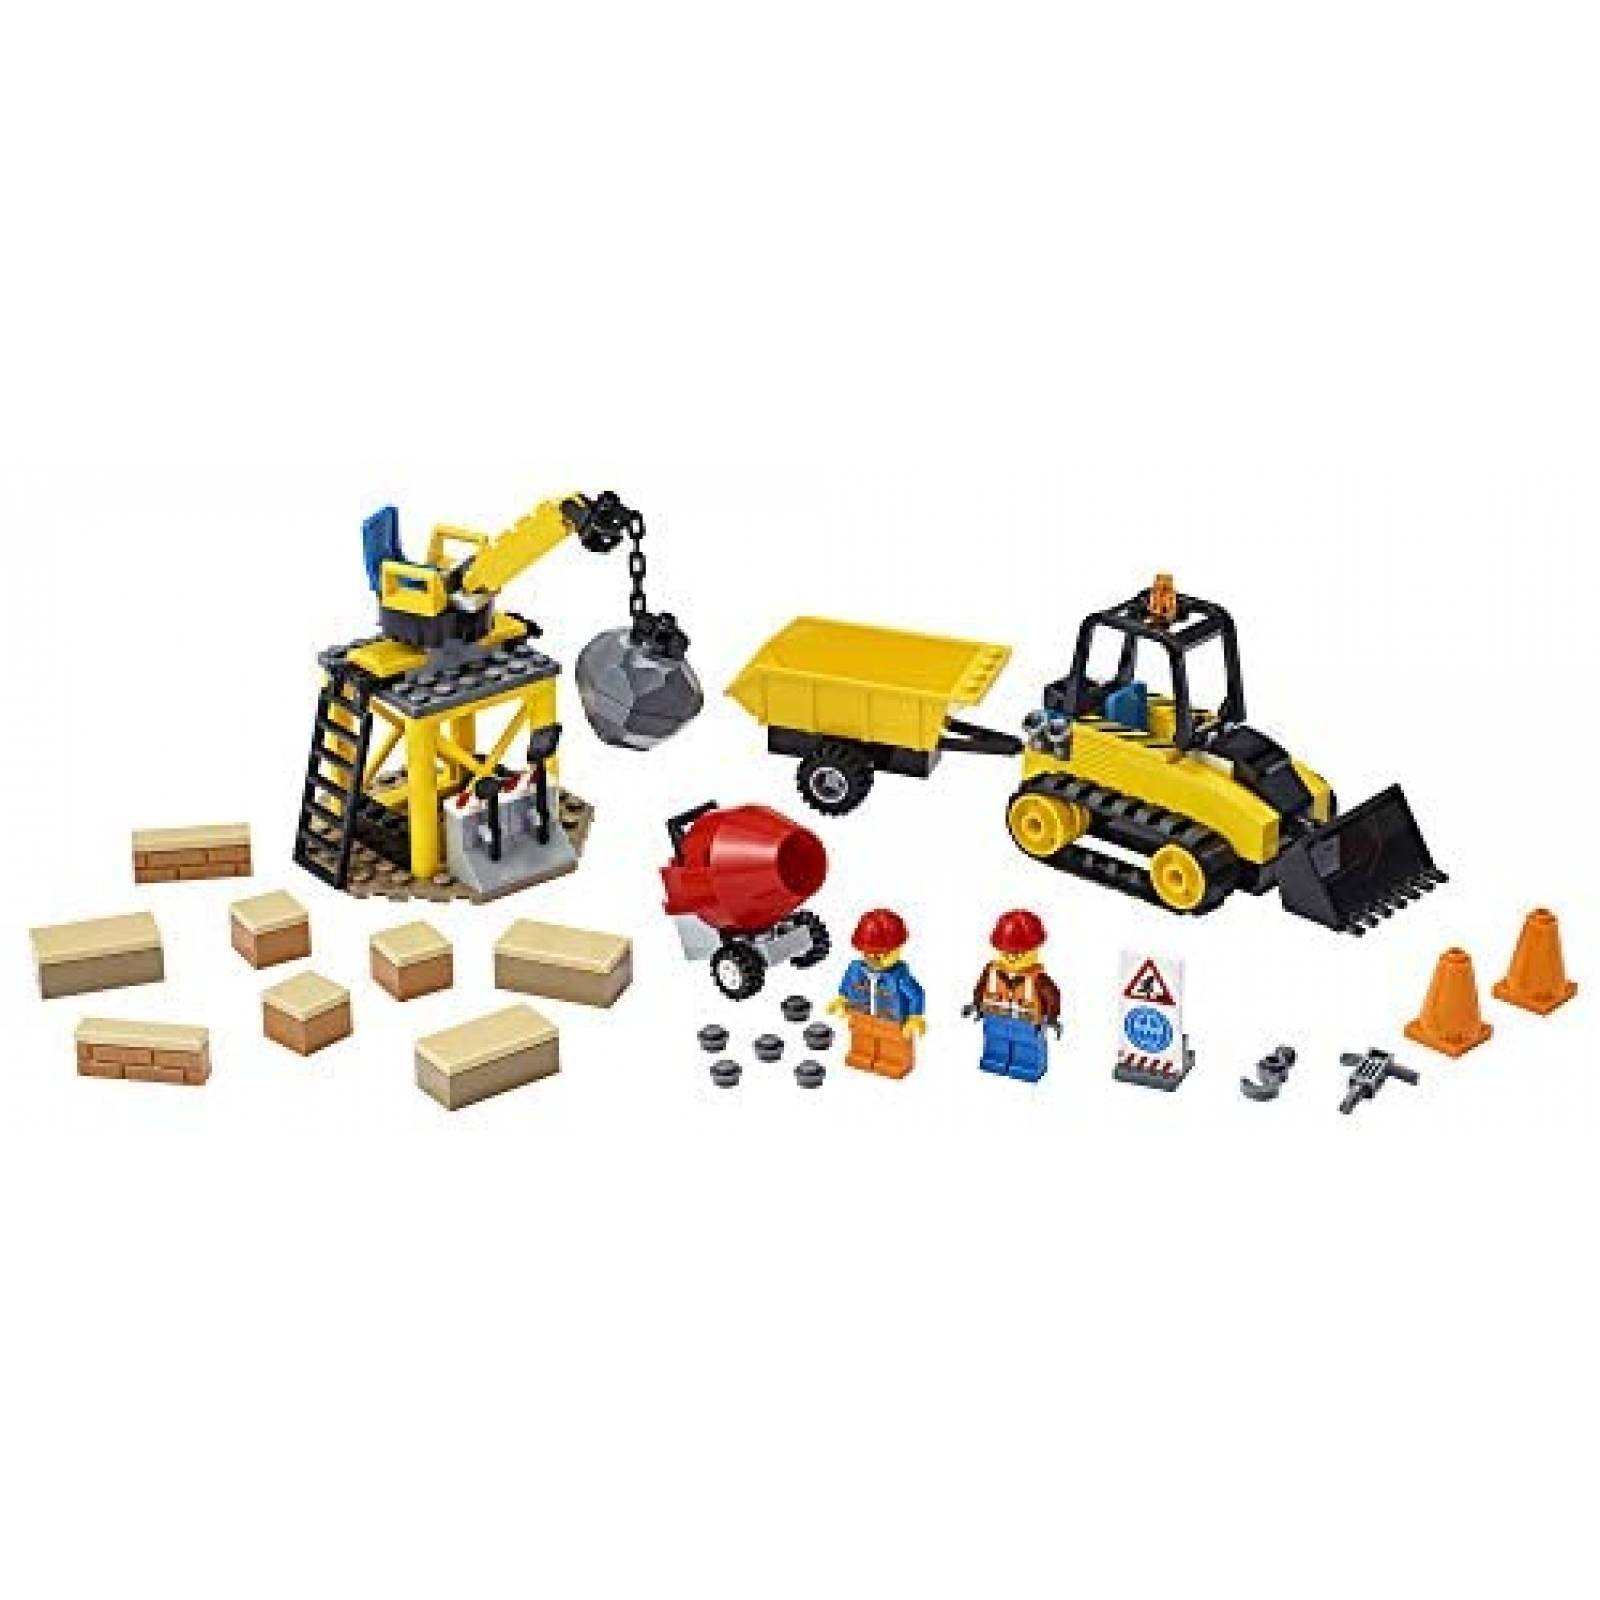 Set de Construcción LEGO City Construction Bulldozer 126 Pzs